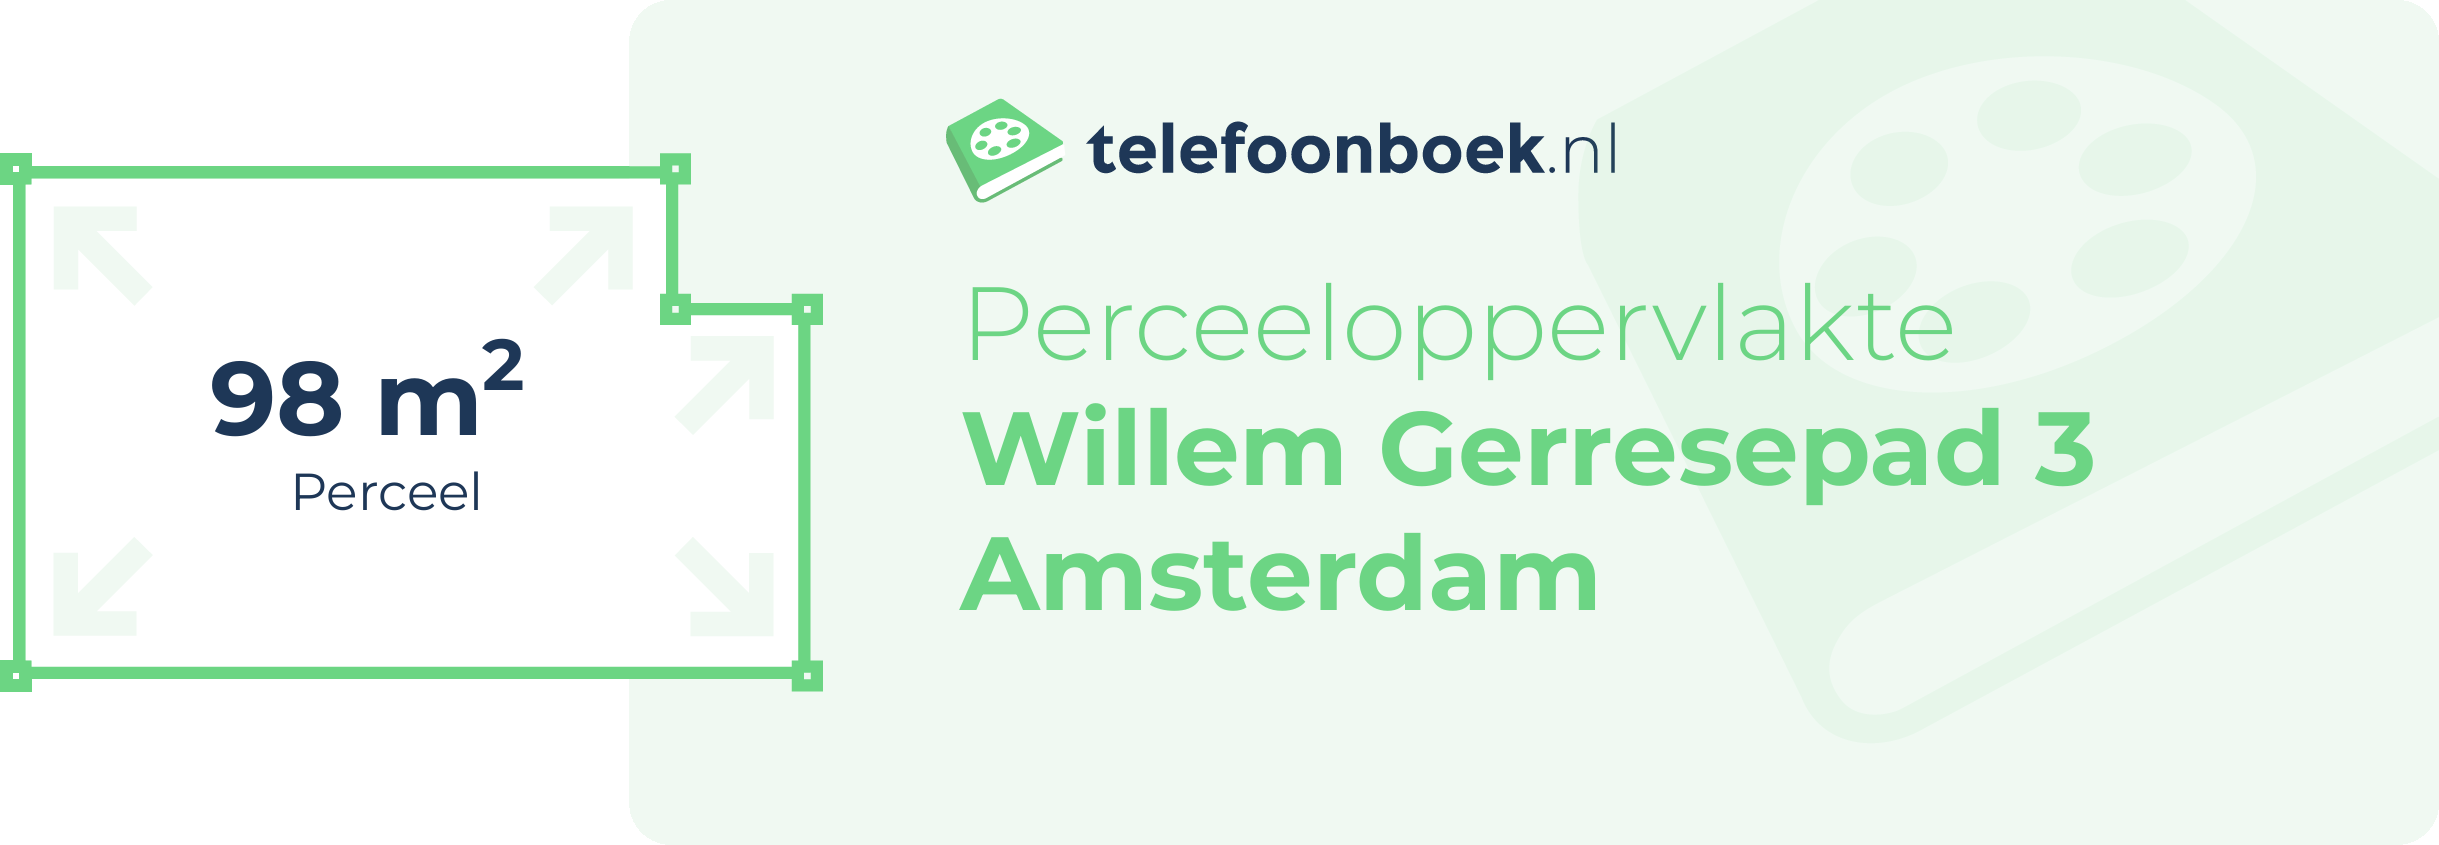 Perceeloppervlakte Willem Gerresepad 3 Amsterdam